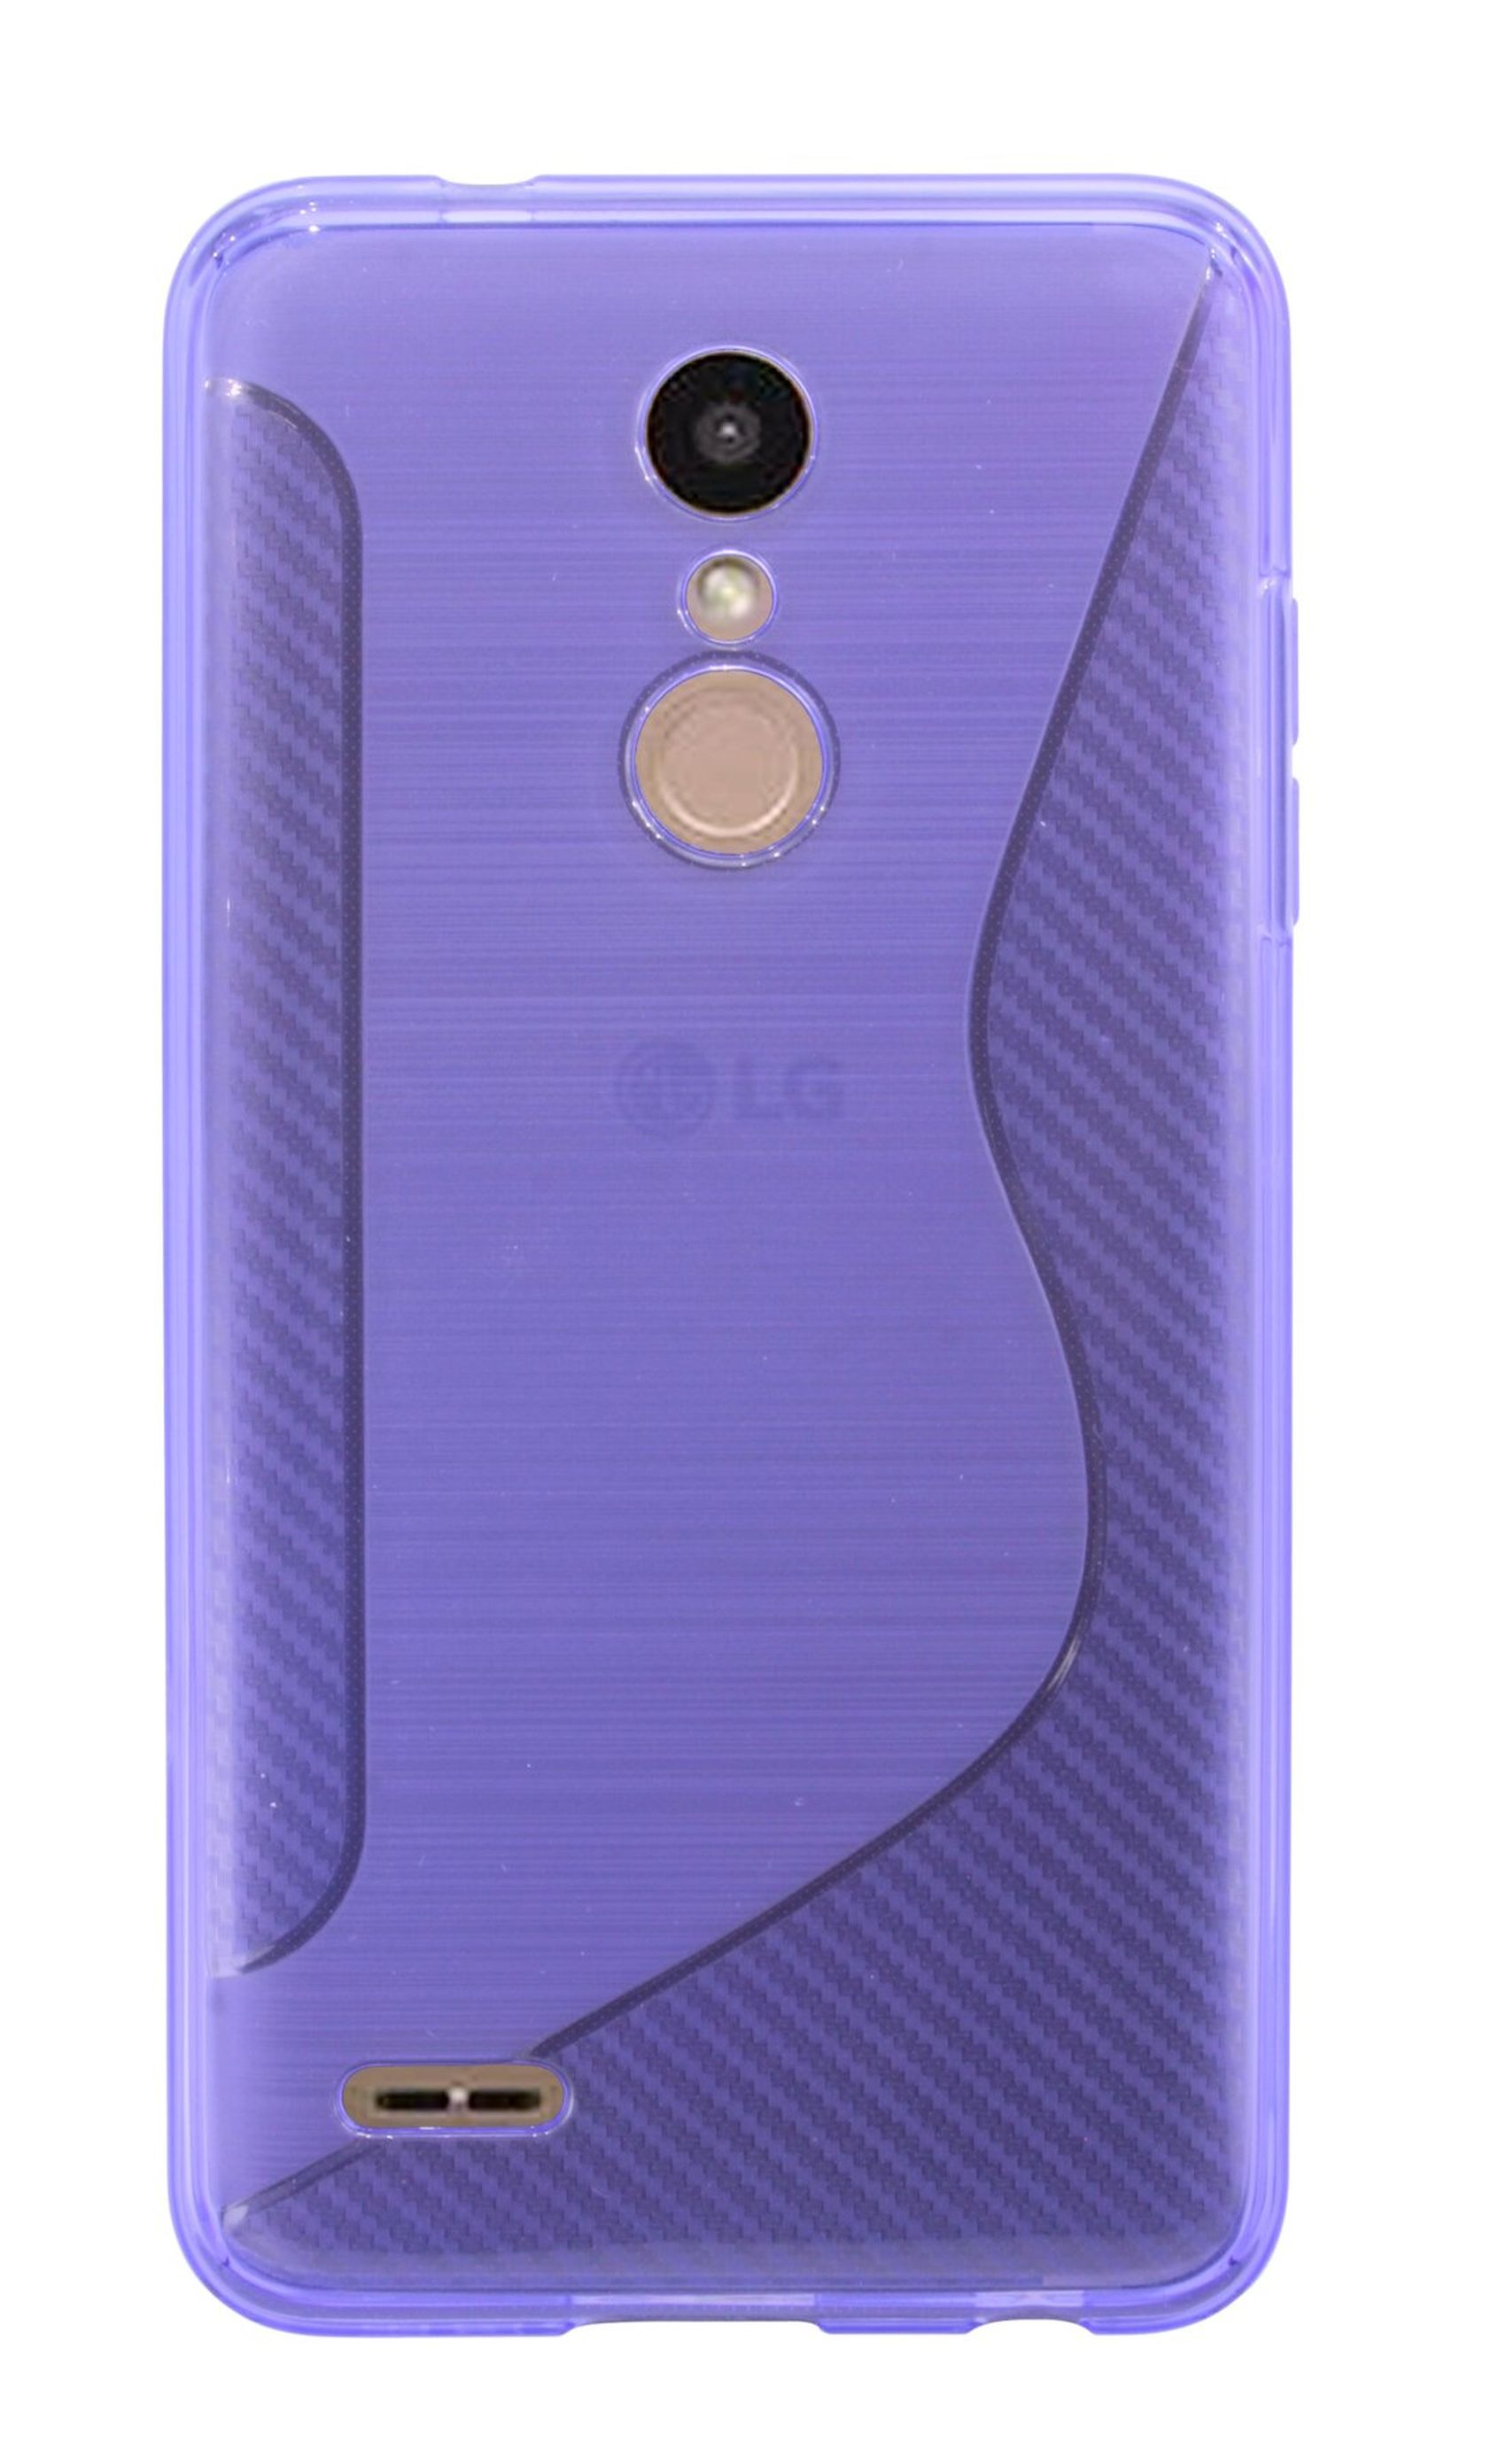 Violett COFI TPU LG K9, Zubehör Case K9//S-Line SchutzHülle Hülle Silikonschale Lila, Silikon LG, Bumper, Bumper Cover in